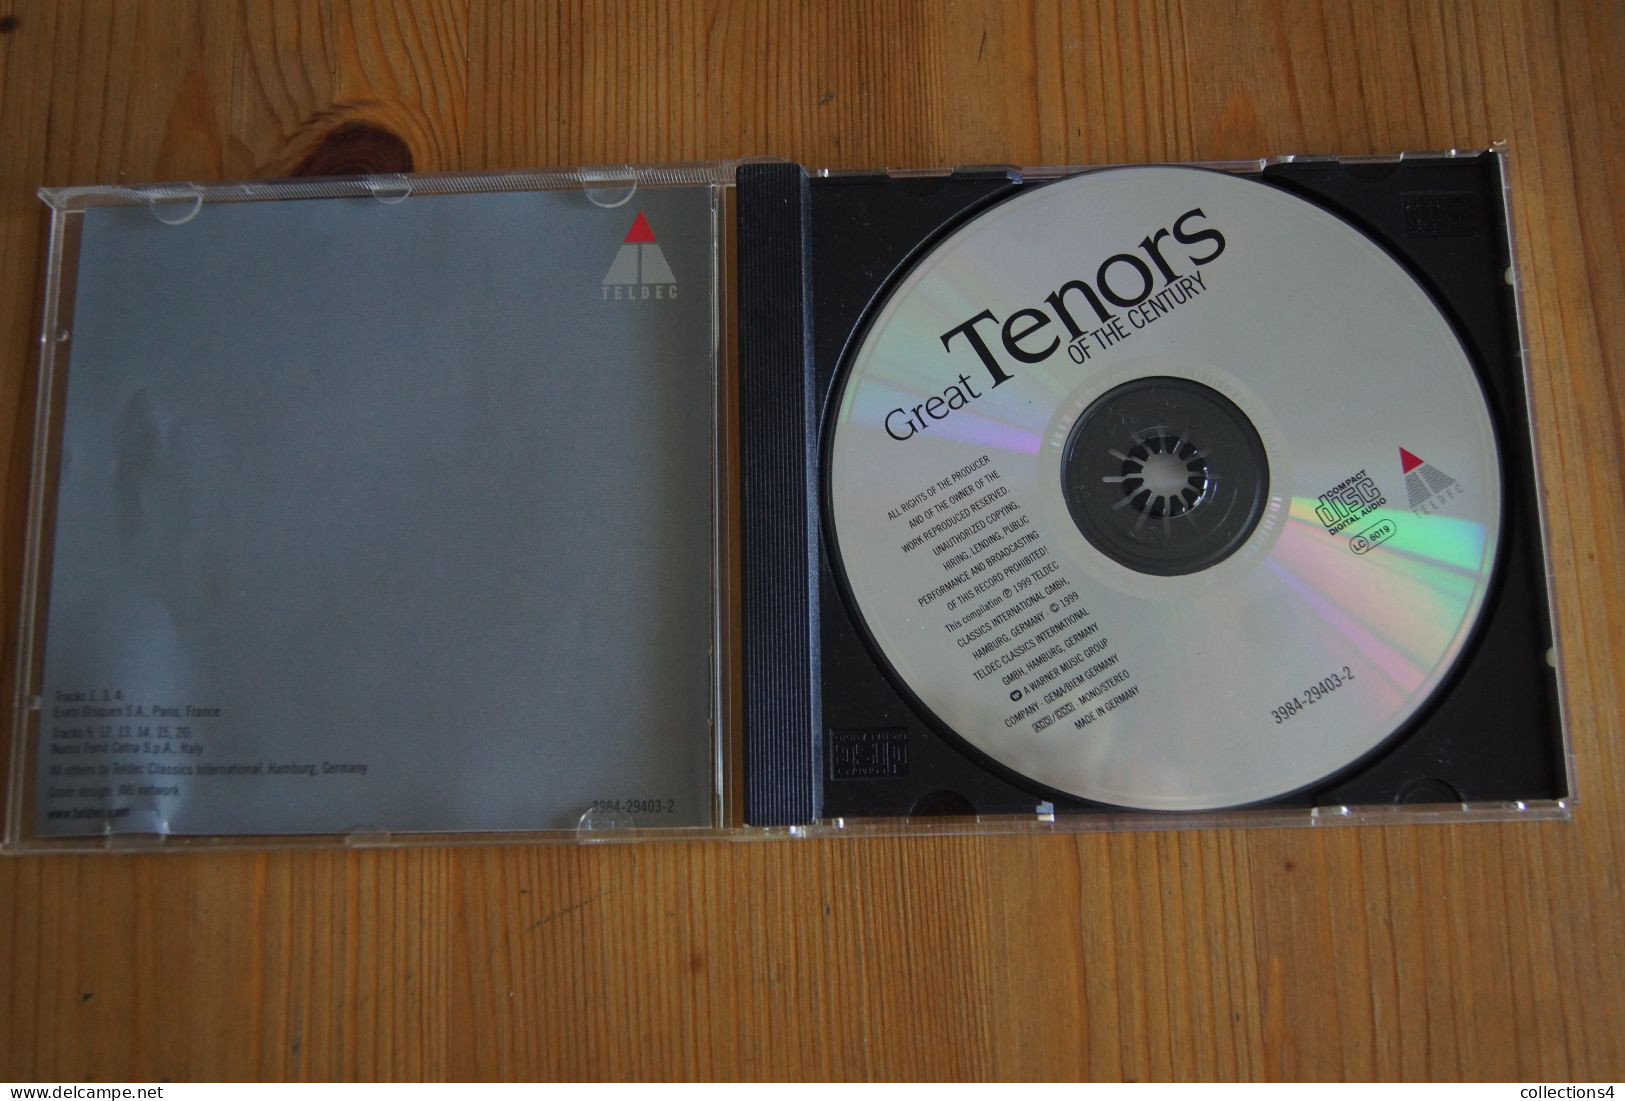 GREAT TENORS OF THE CENTURY CD ALLEMAND 1999 VALEUR + OPERA JOSE CURA P SEIFFERT R ALAGNA ETC - Filmmusik